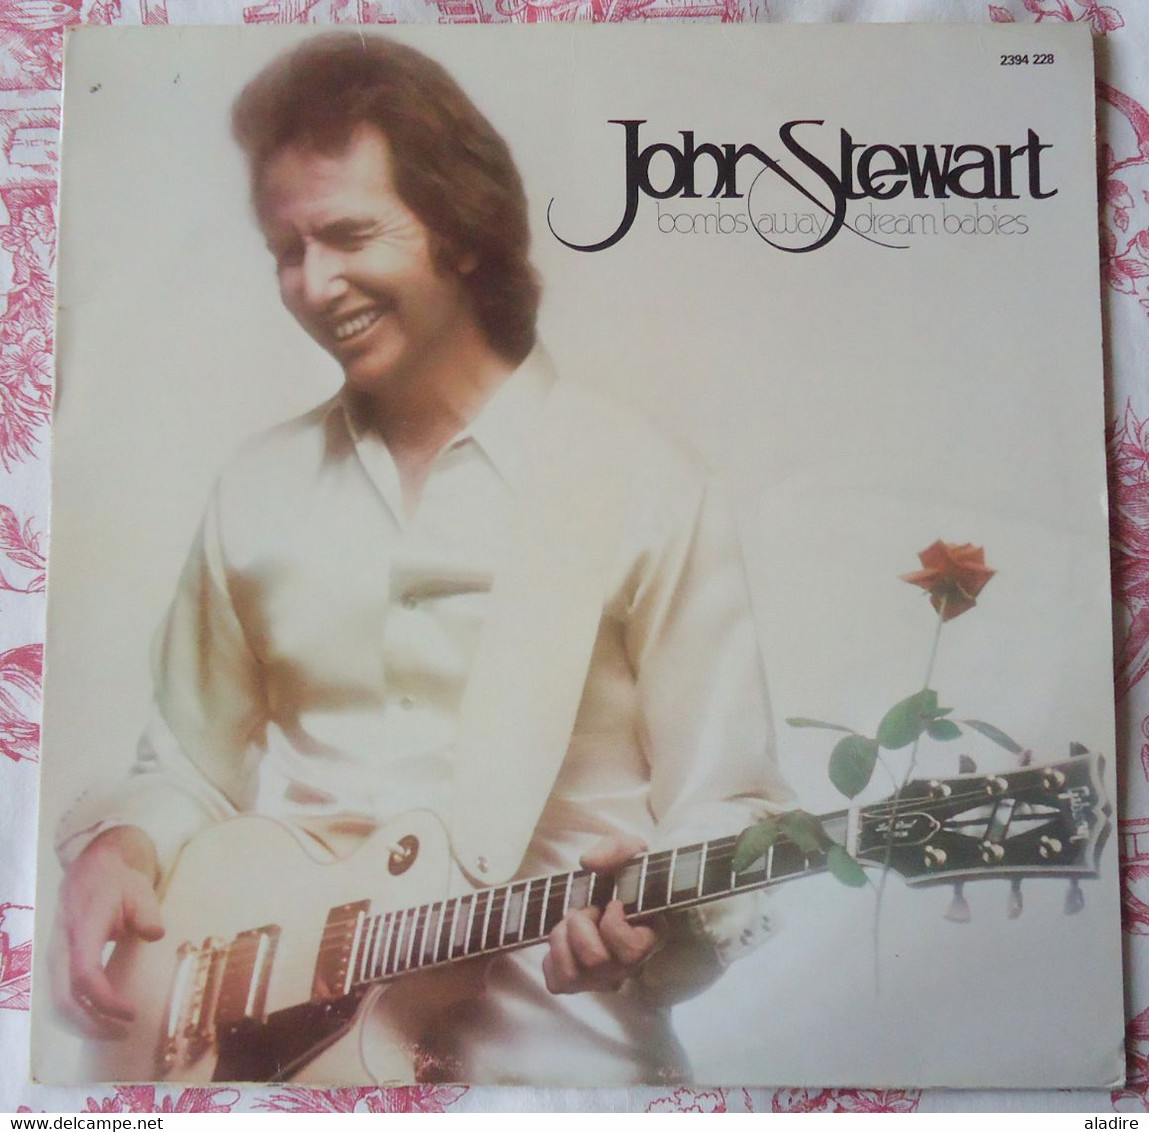 JOHN STEWART - Bombs Away Dream Babies - Warner Bros Records, 1979 - Country Y Folk